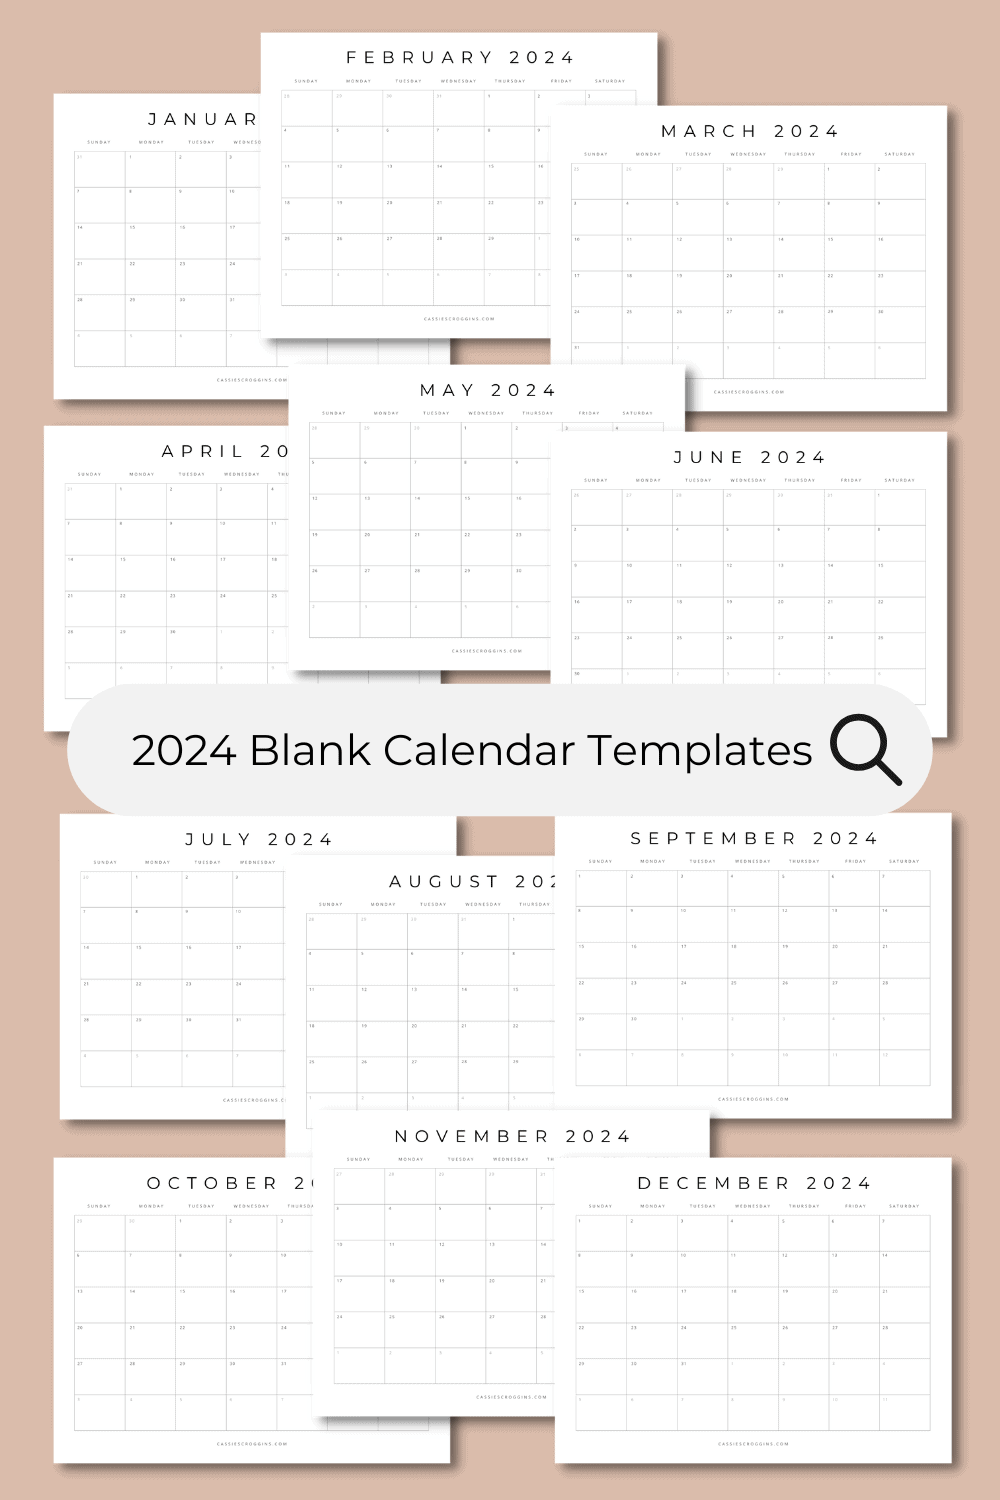 Free Printable 2024 Blank Calendar Templates (All 12 Months) inside Free Printable Calendar 2024 Planner